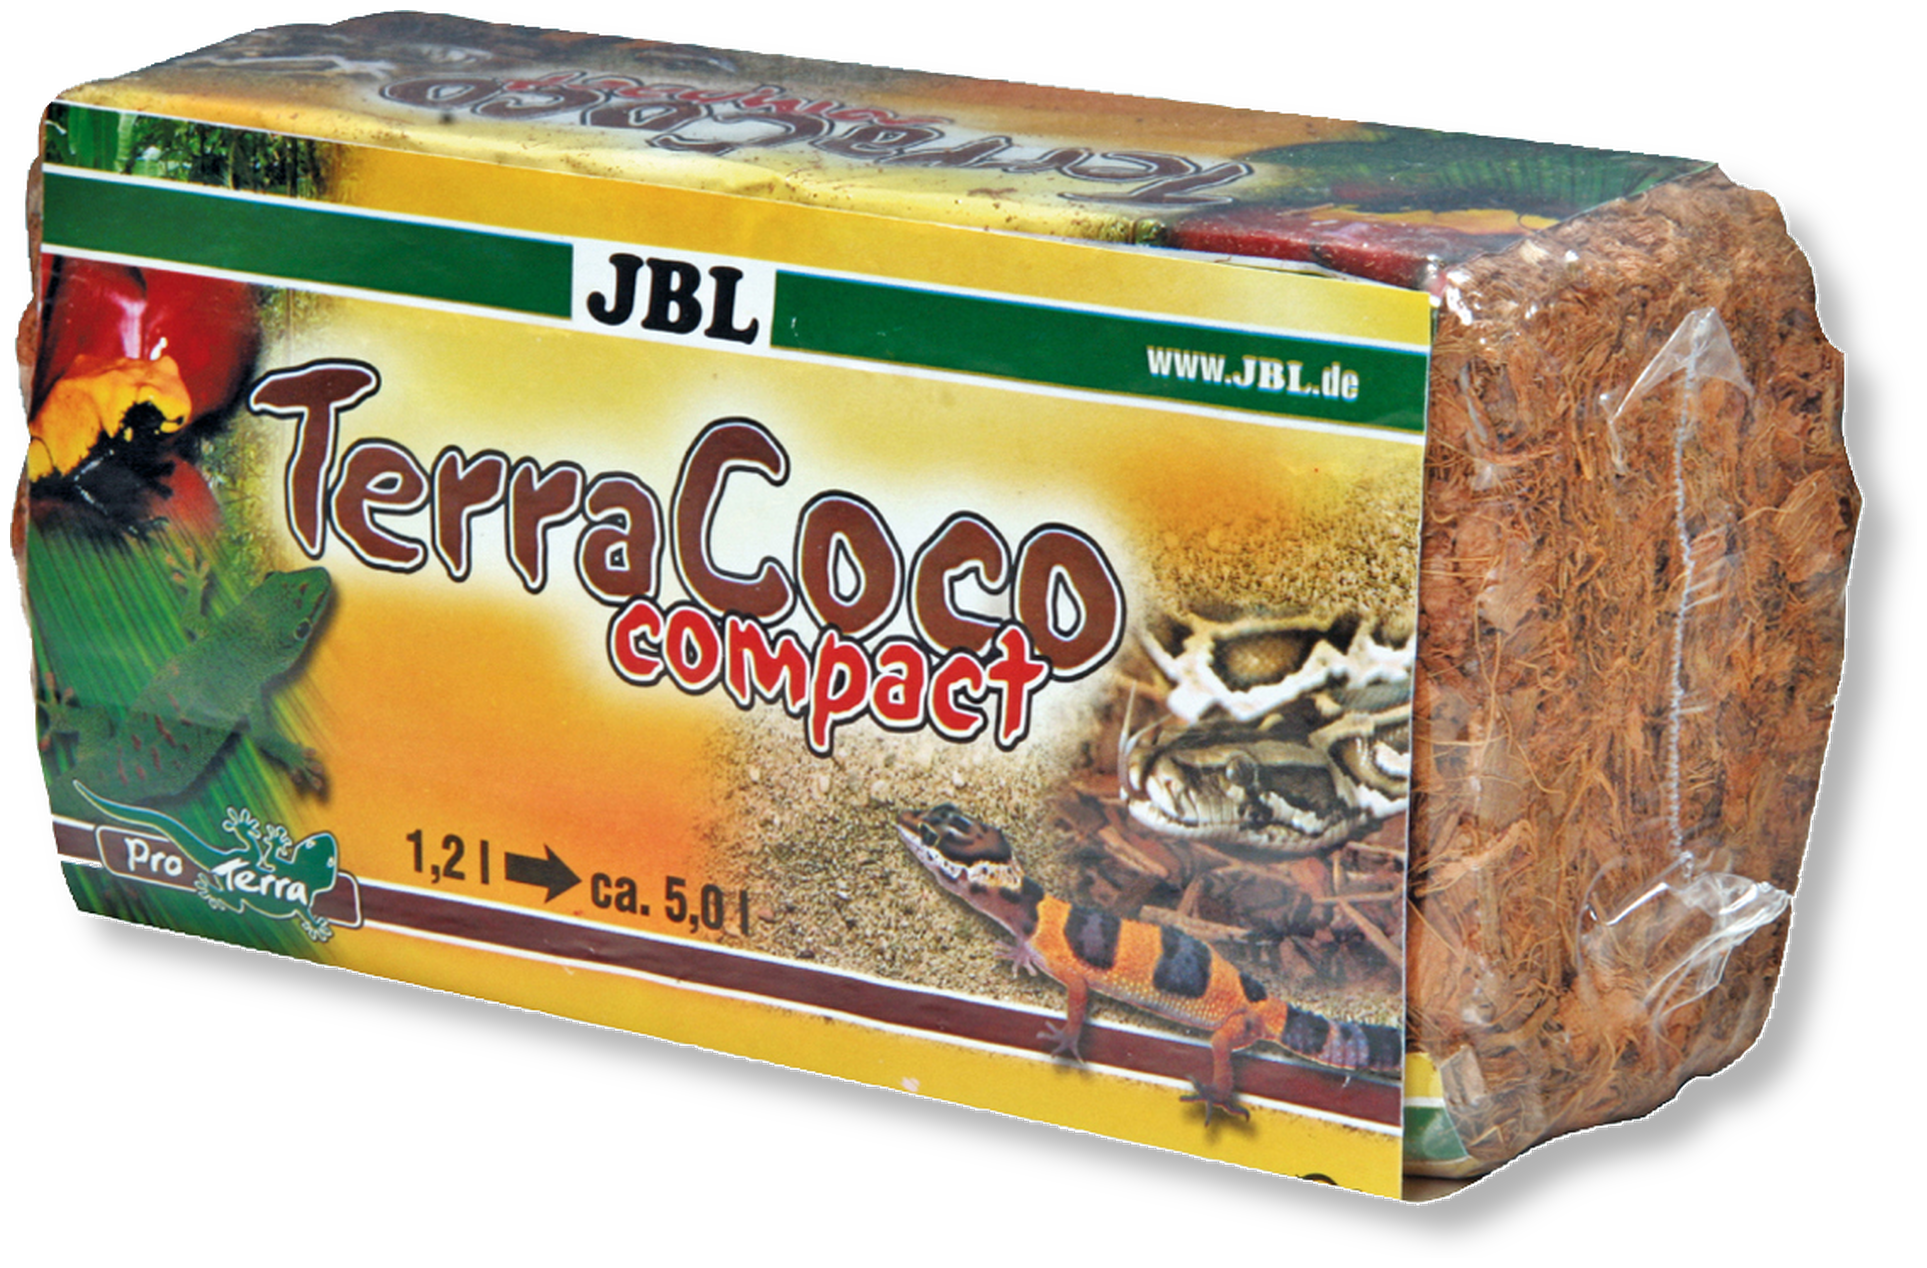   JBL TerraCoco Compact, 500 